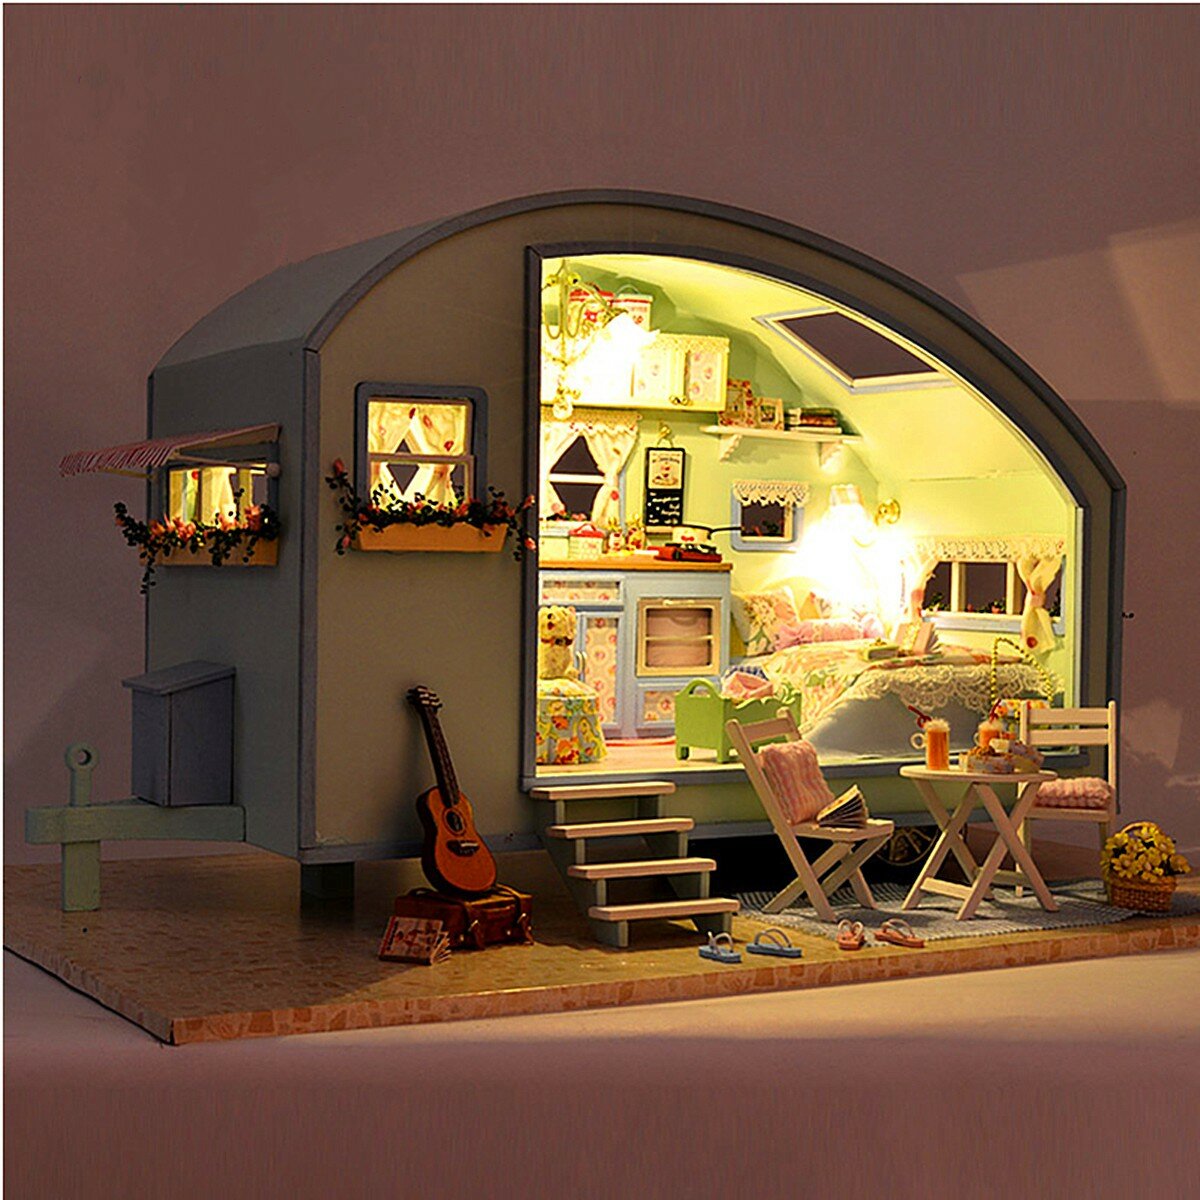 

Cuteroom DIY Wooden Dollhouse Miniature Kit Doll house LED+Music+Voice Control